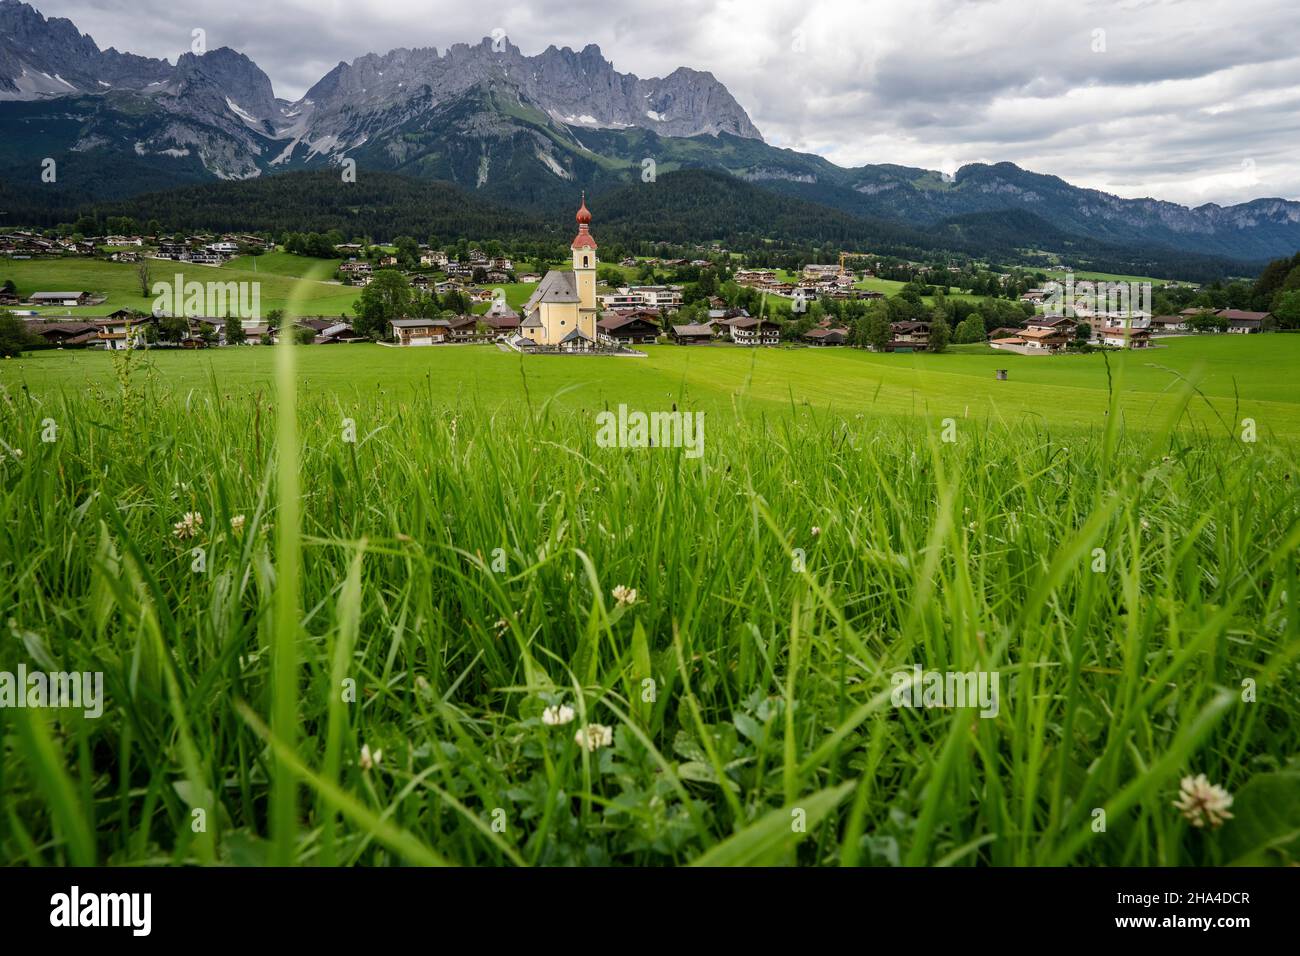 yellow local church in ellmau. village of going. wilden kaiser mountains in background. tirol,alps,austria. Stock Photo